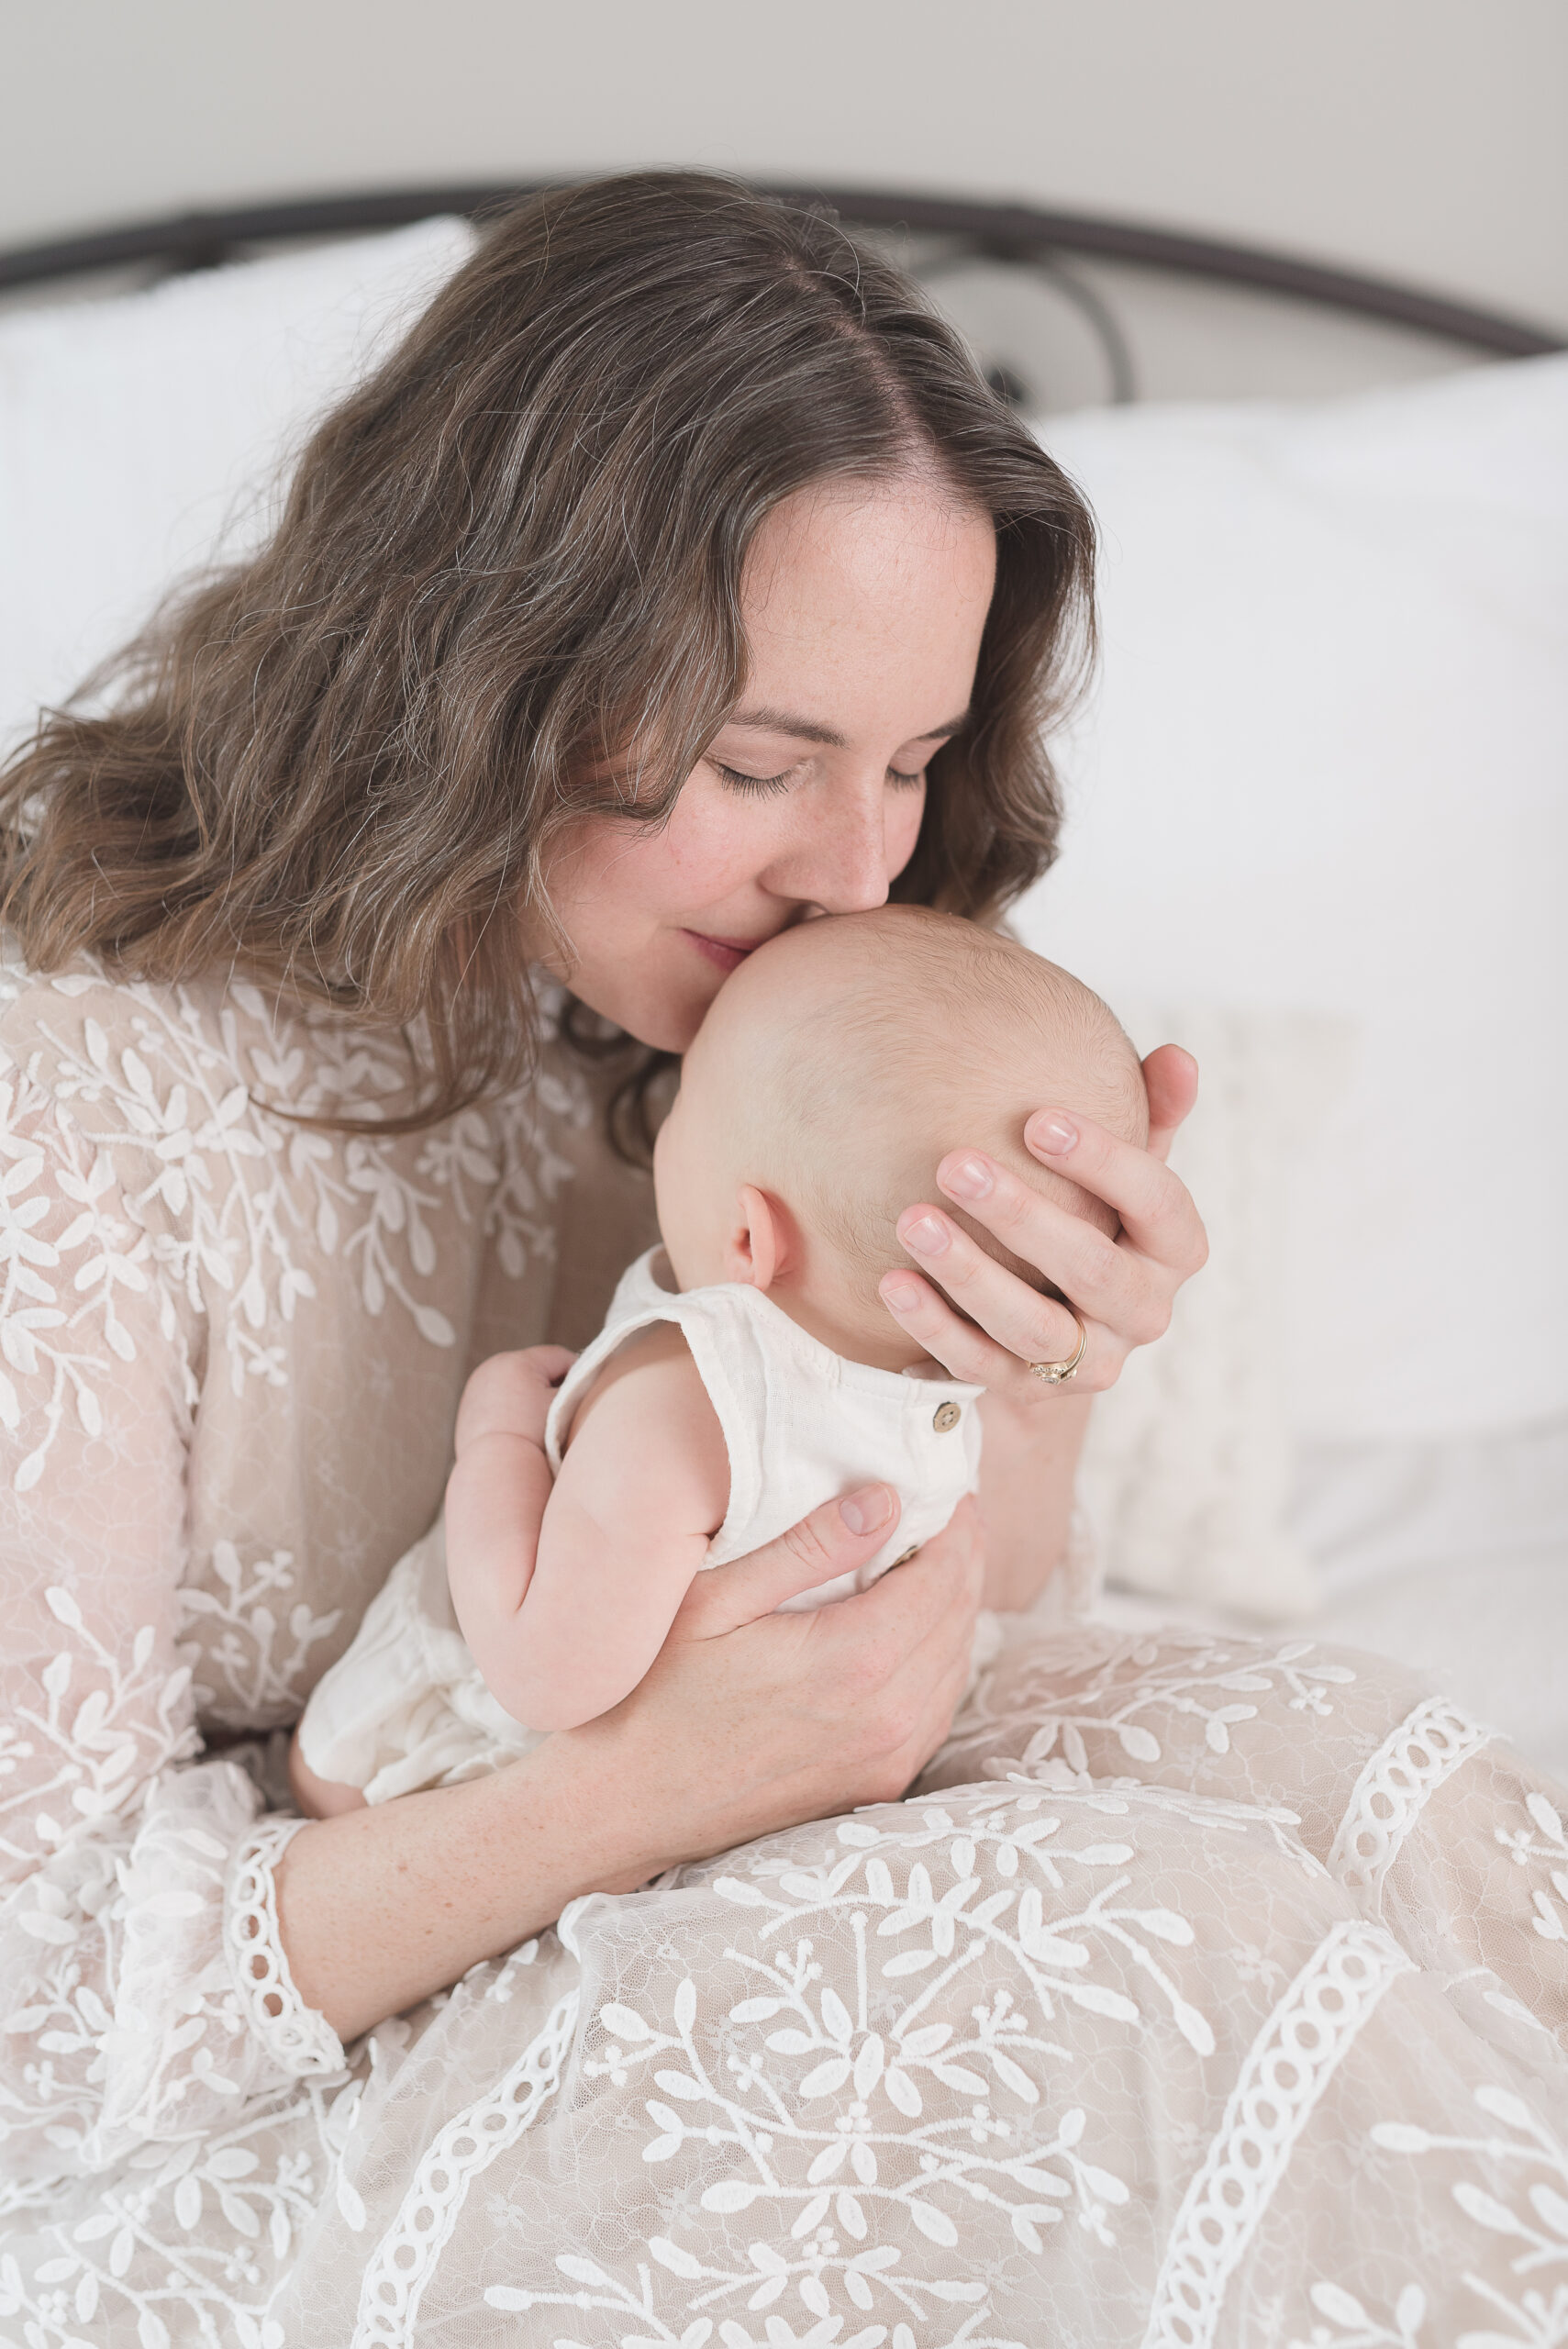 Postpartum doula holding new infant